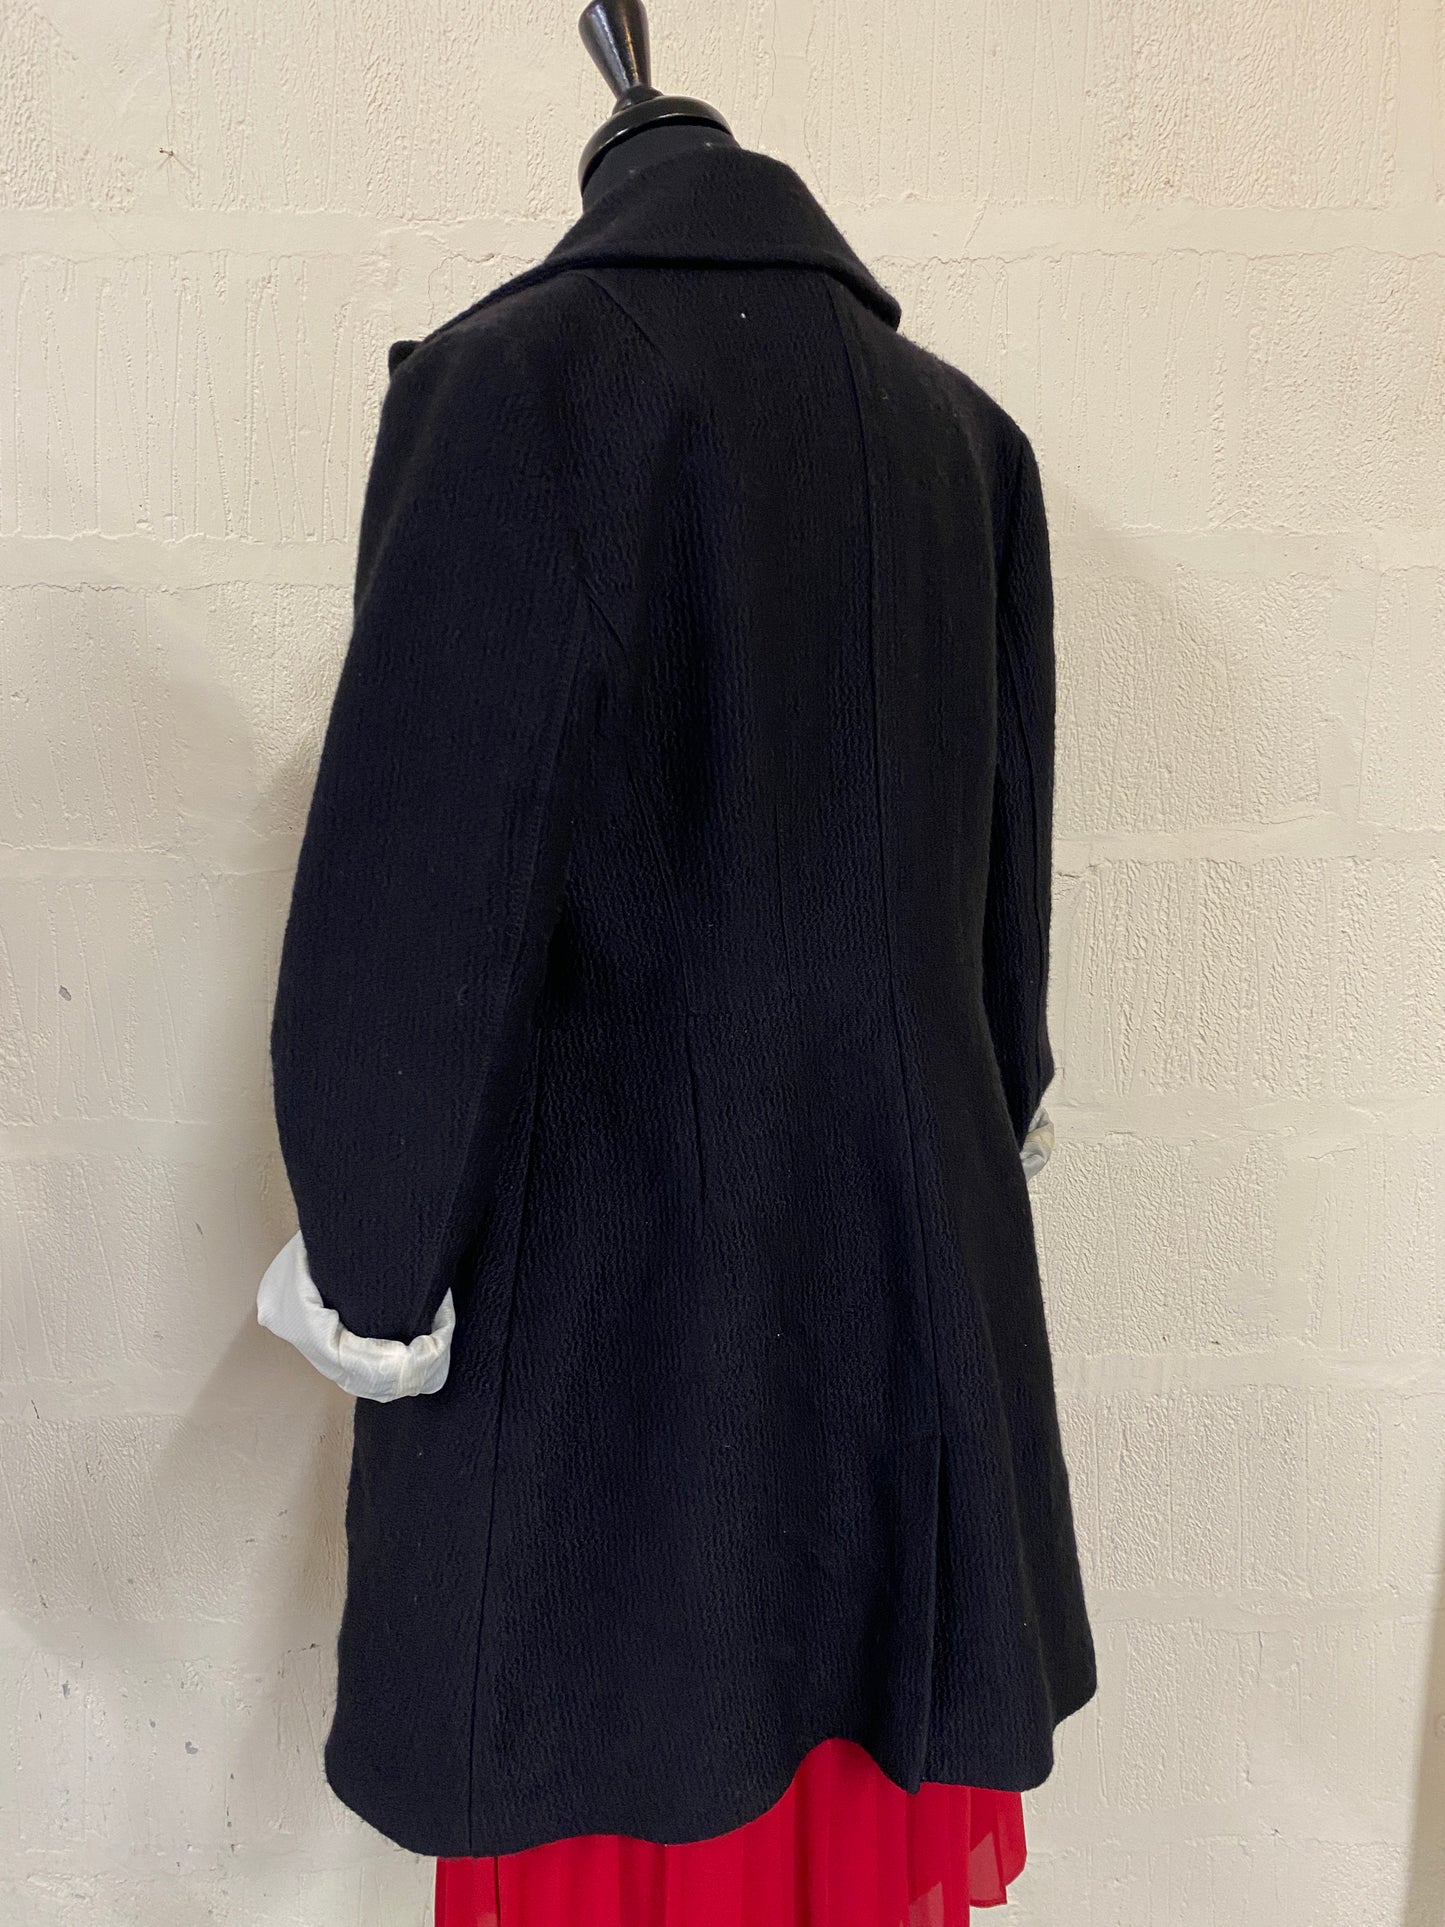 Black Wool Mix Winter Coat Size M